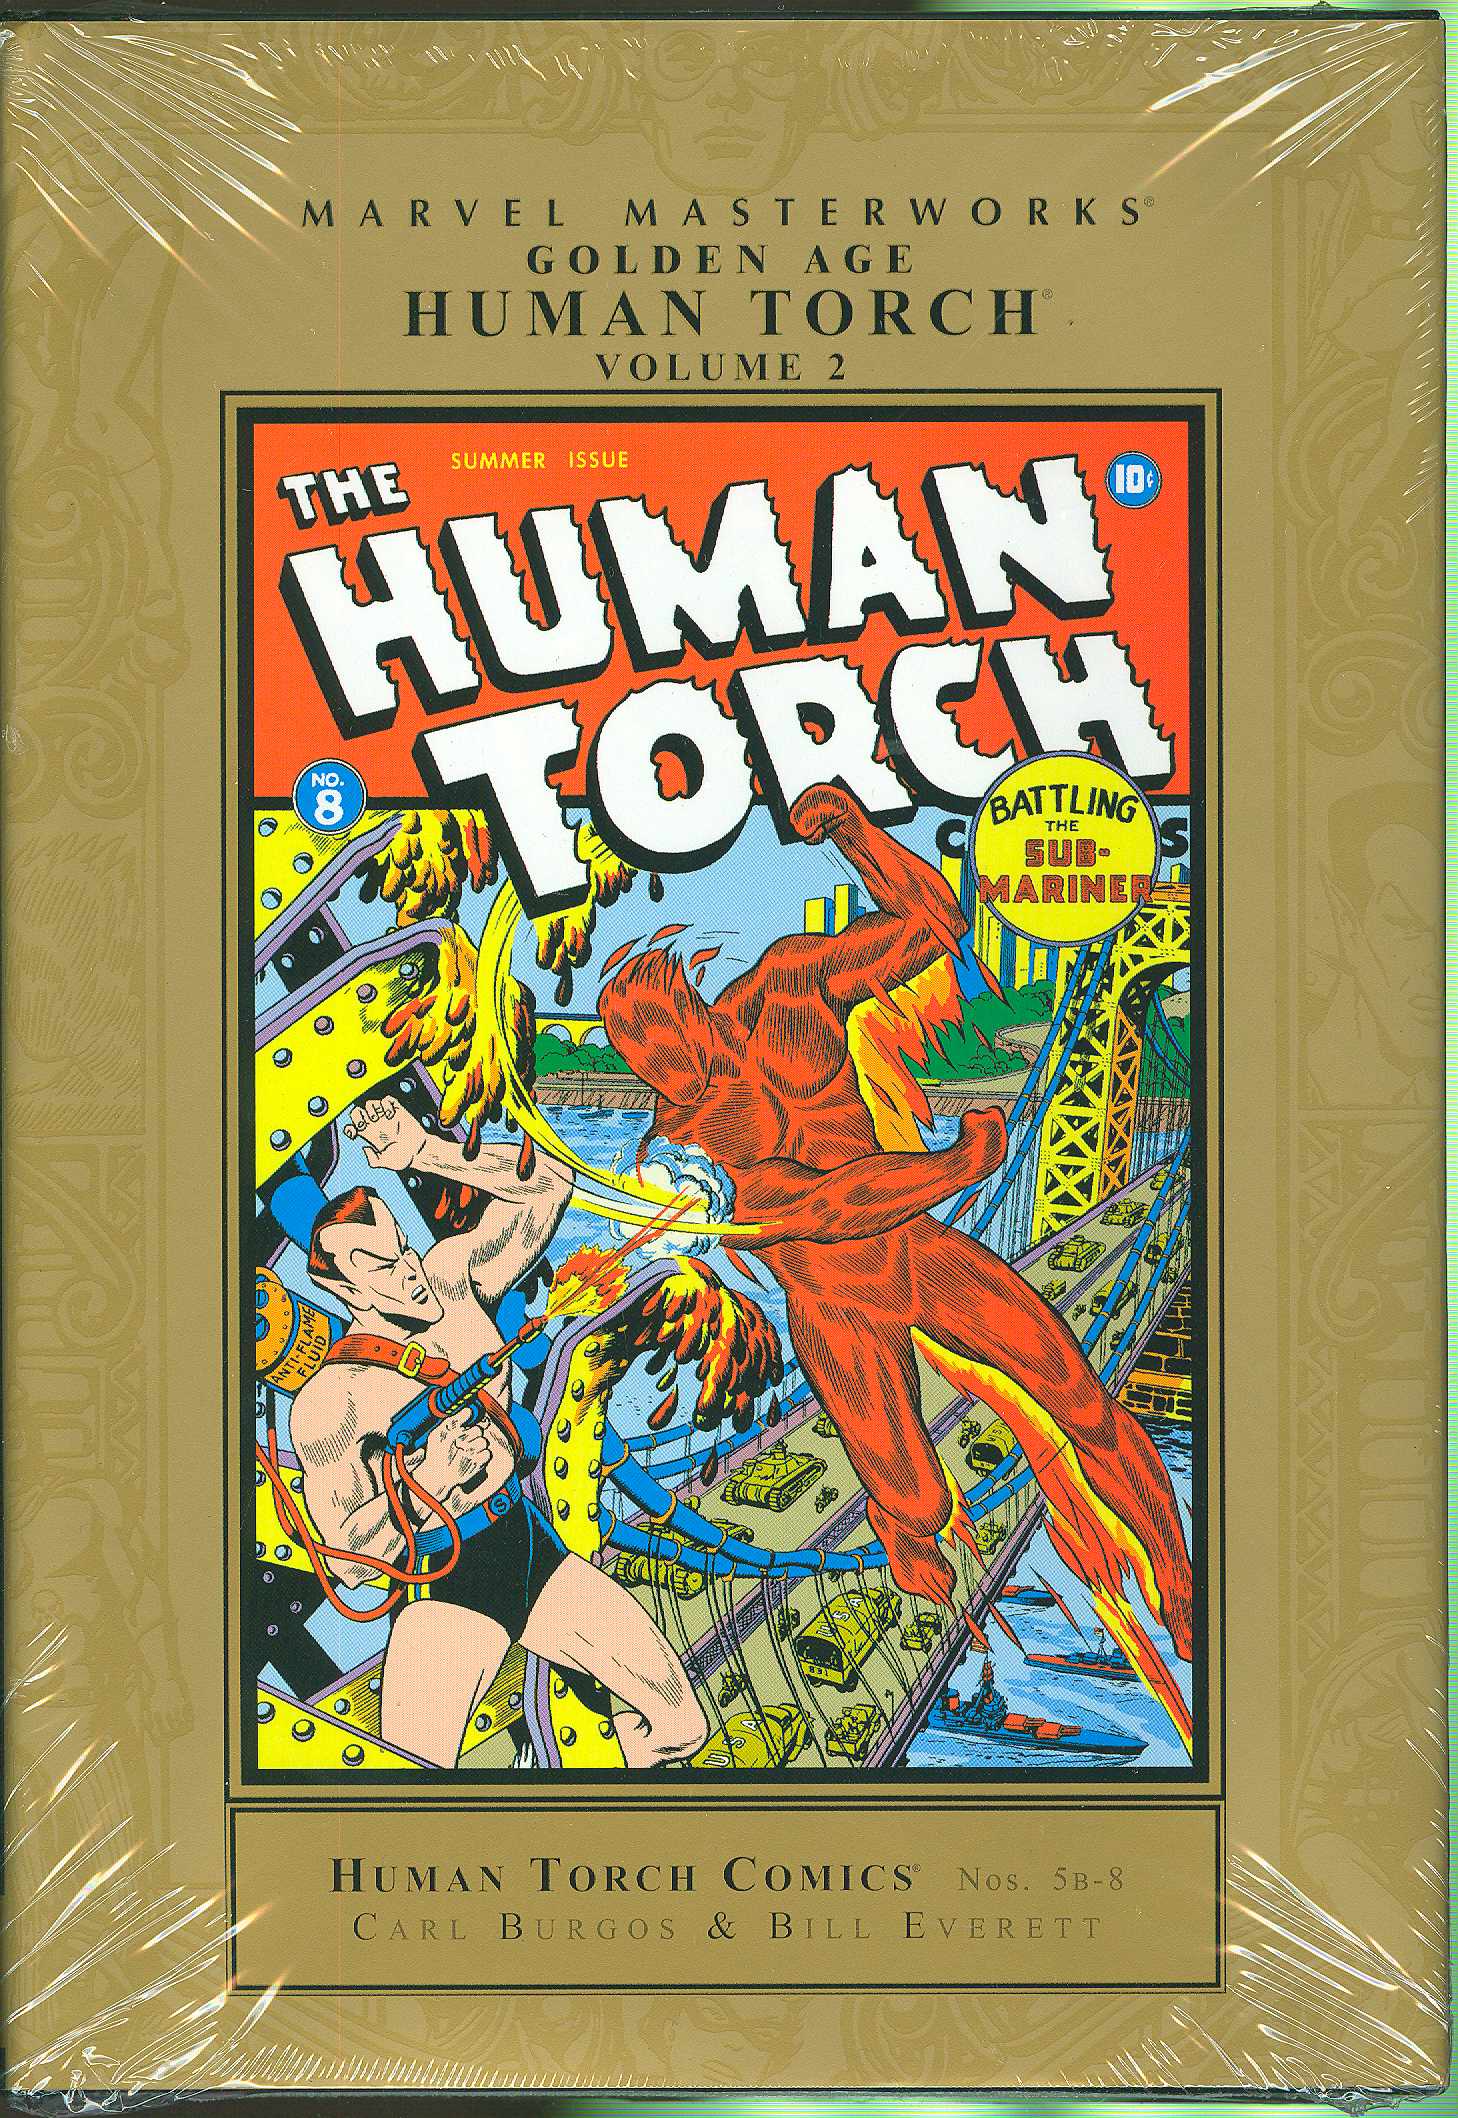 Marvel Masterworks Golden Age Human Torch Hardcover Volume 2